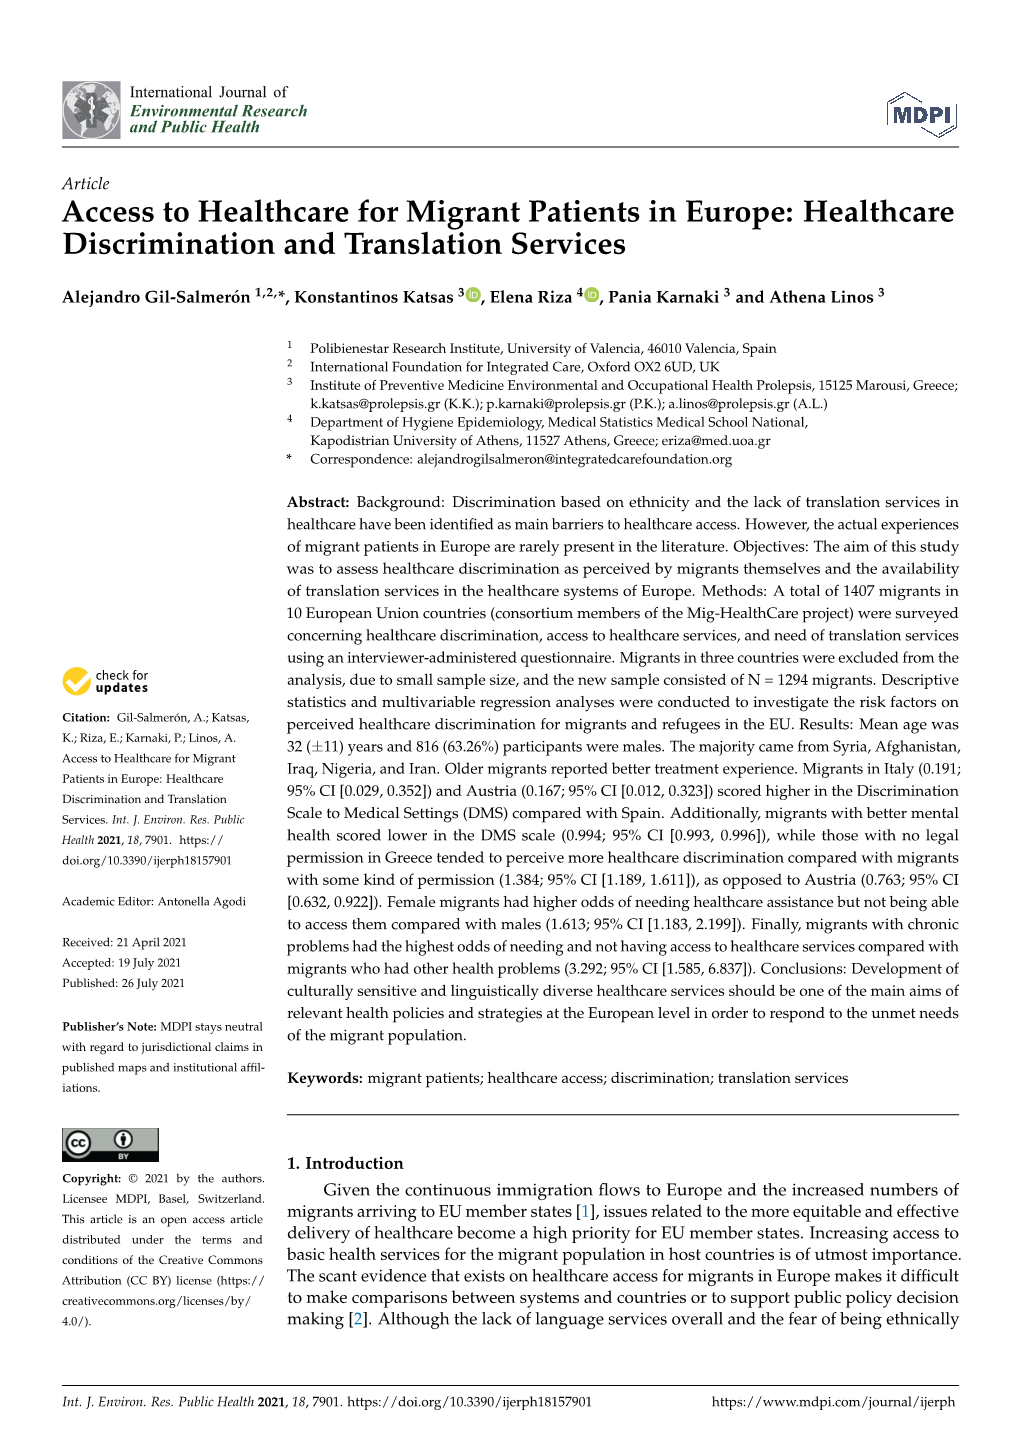 Healthcare Discrimination and Translation Services